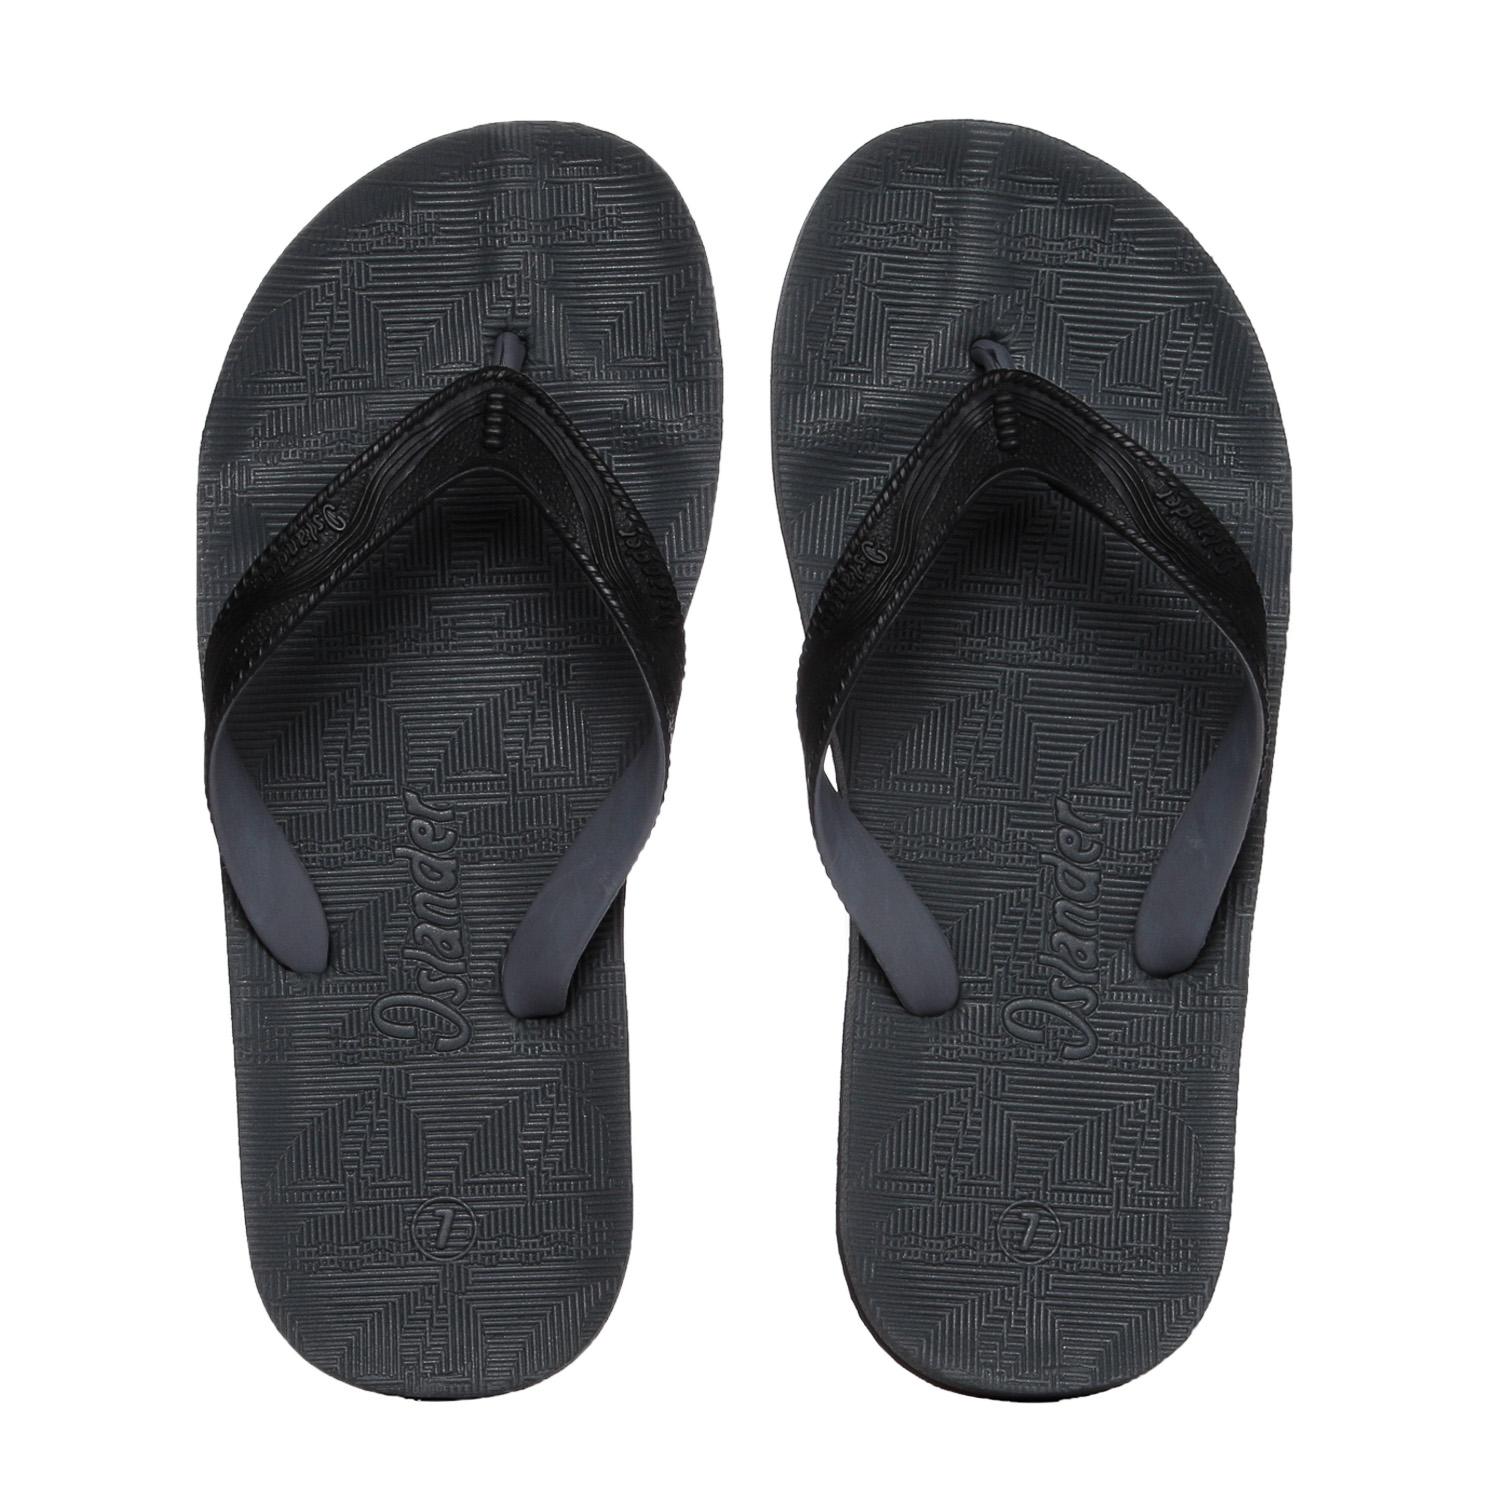 islander slippers price list